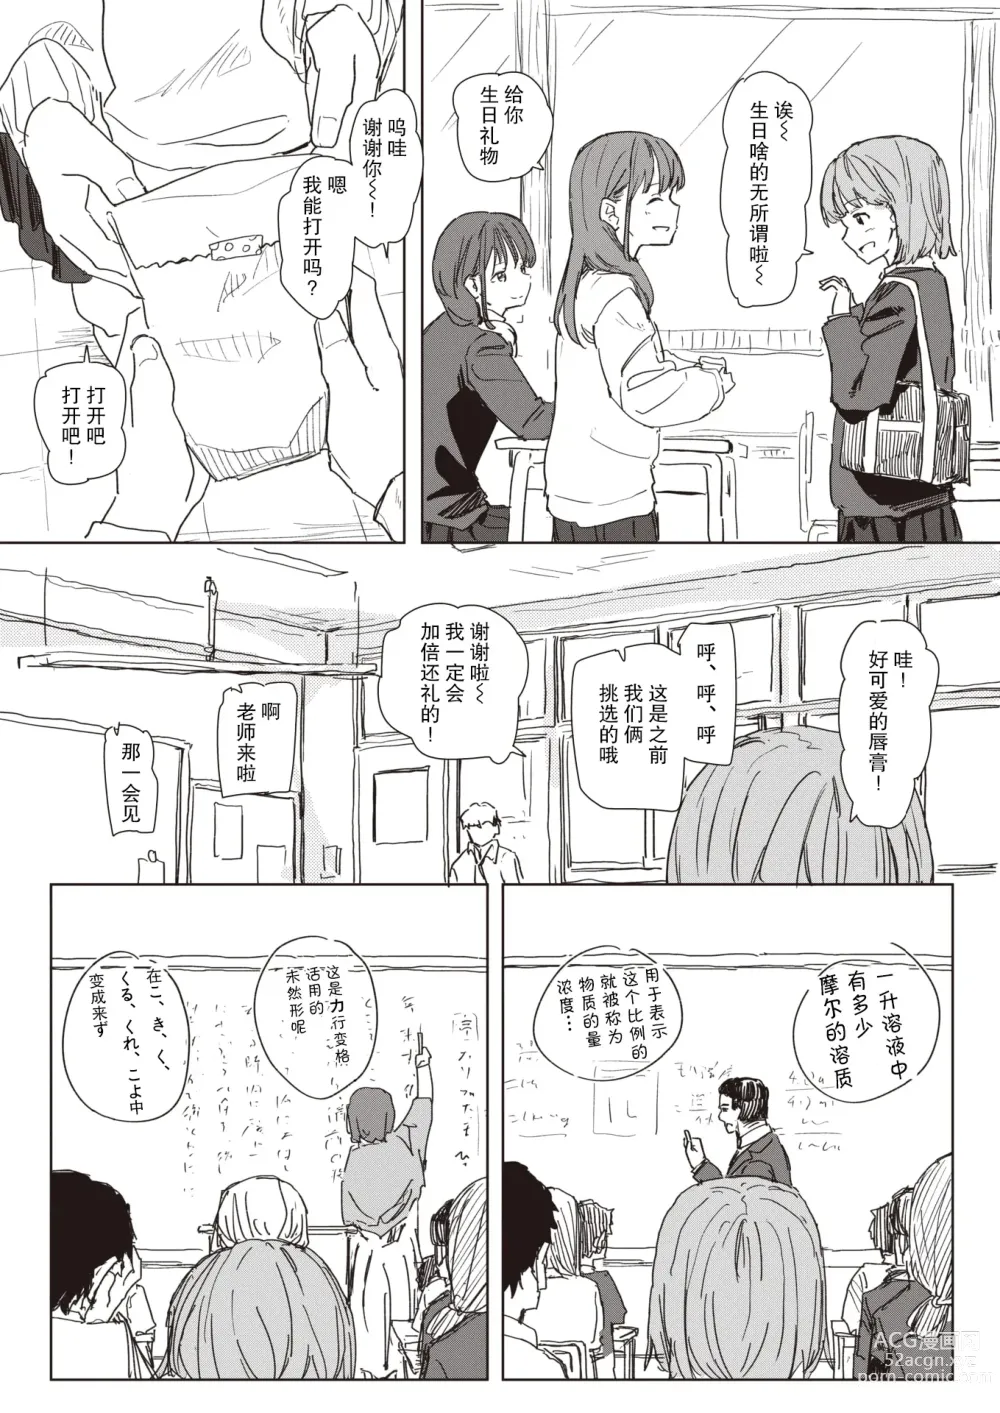 Page 5 of manga Unhappy Birthday